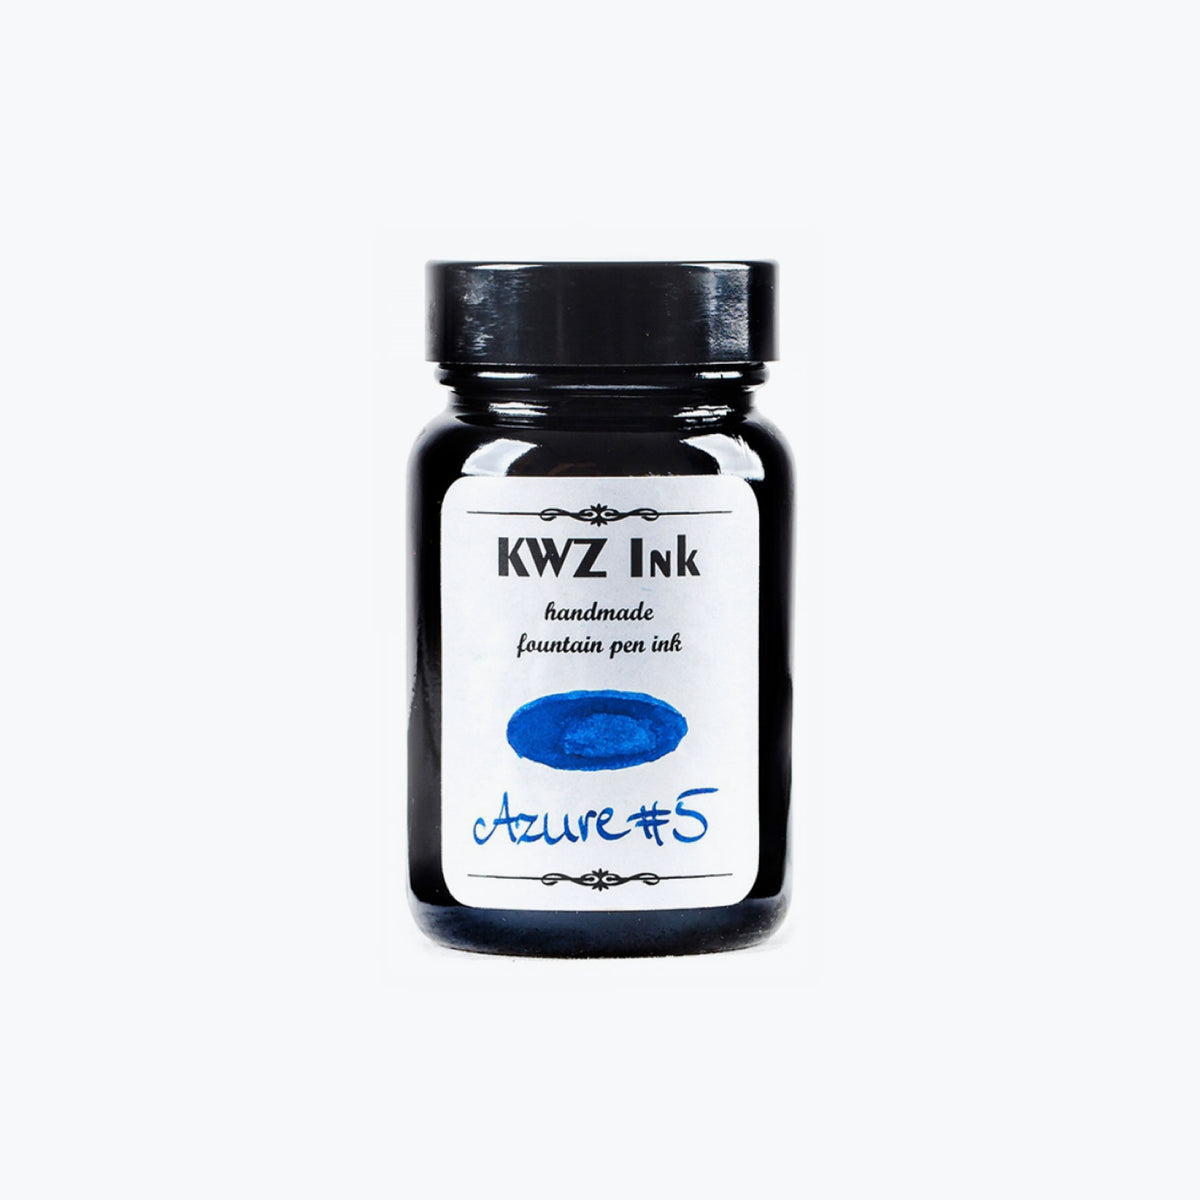 KWZ Azure #5 fountain pen ink